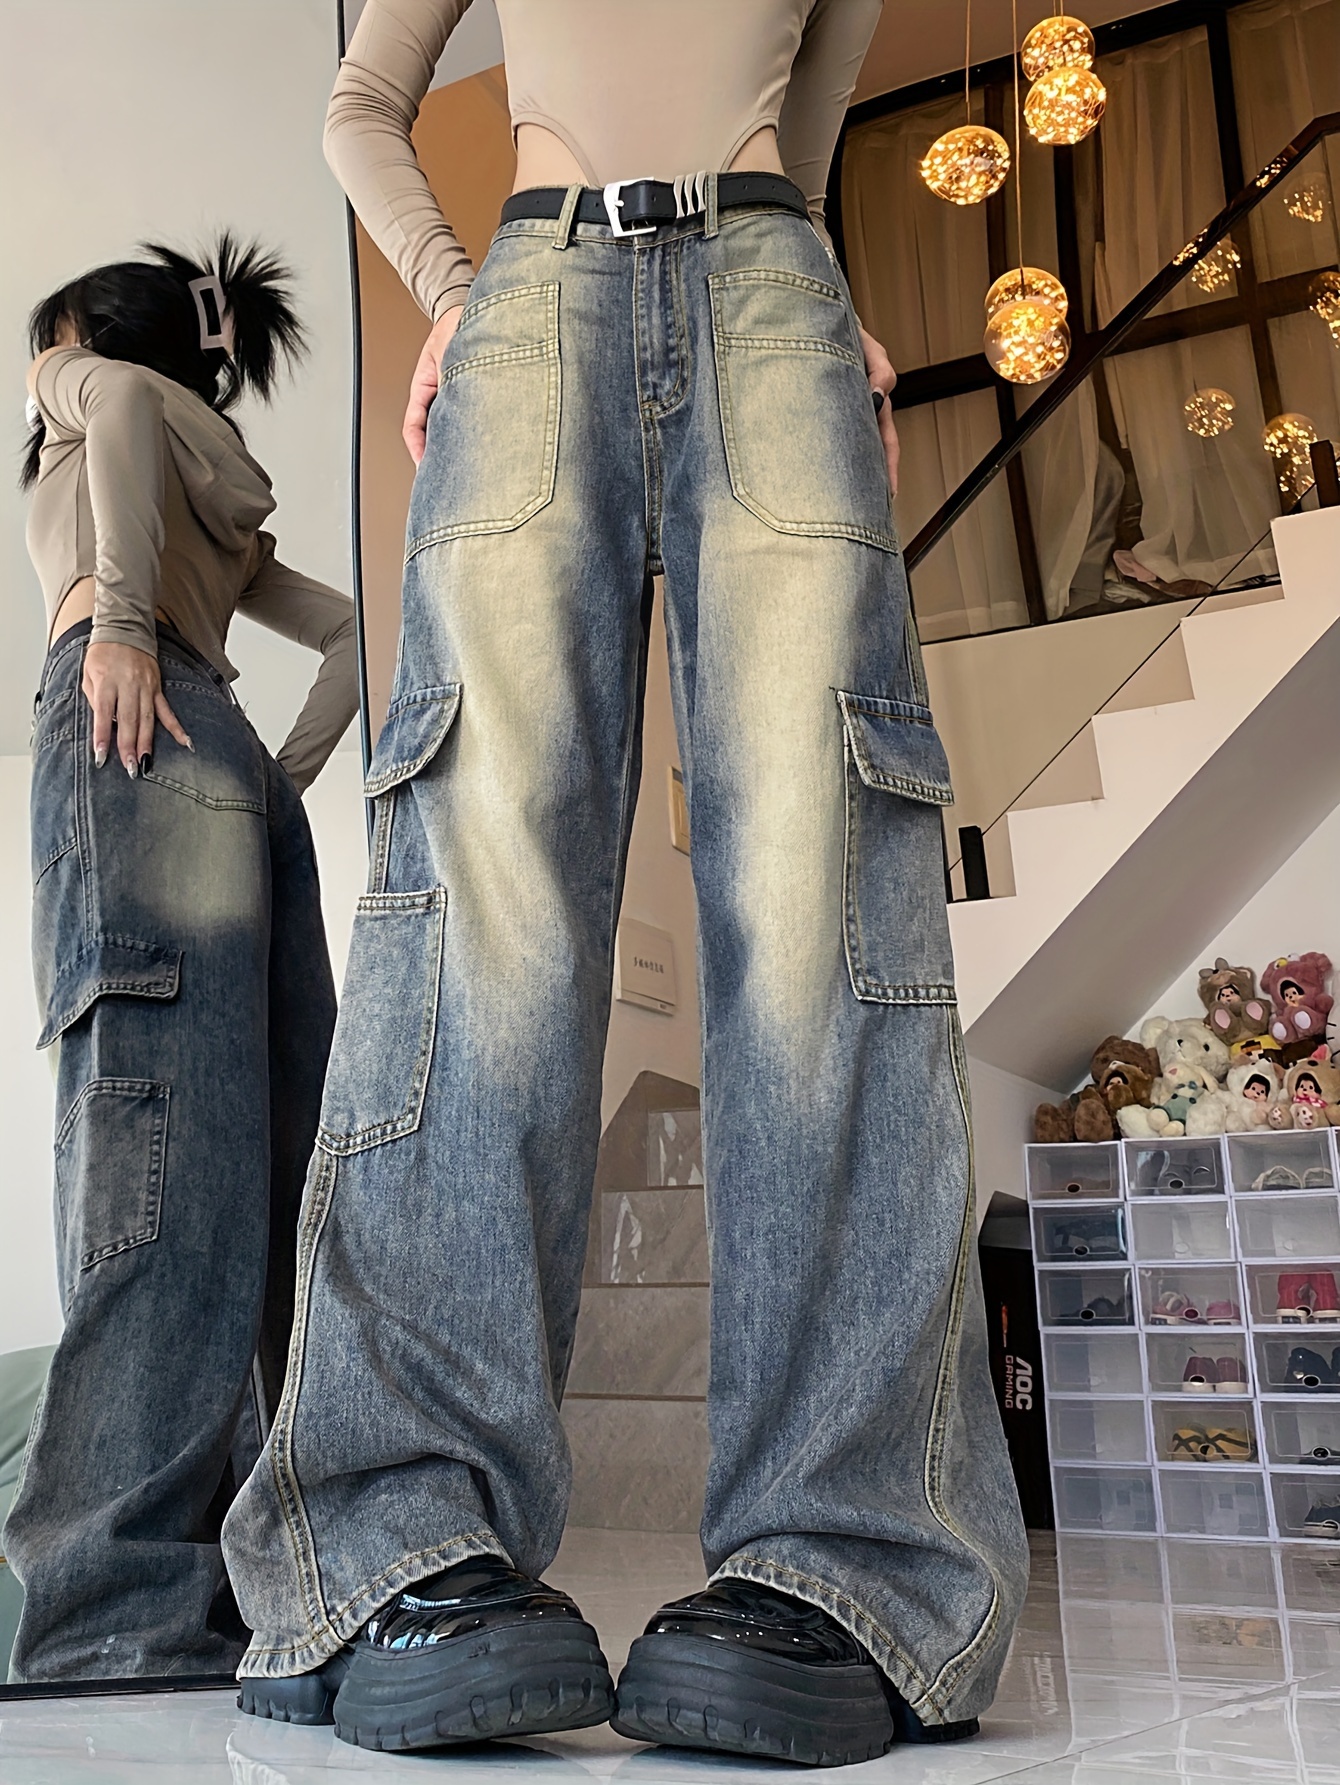 Baggy Cargo Pants – The Korean Fashion